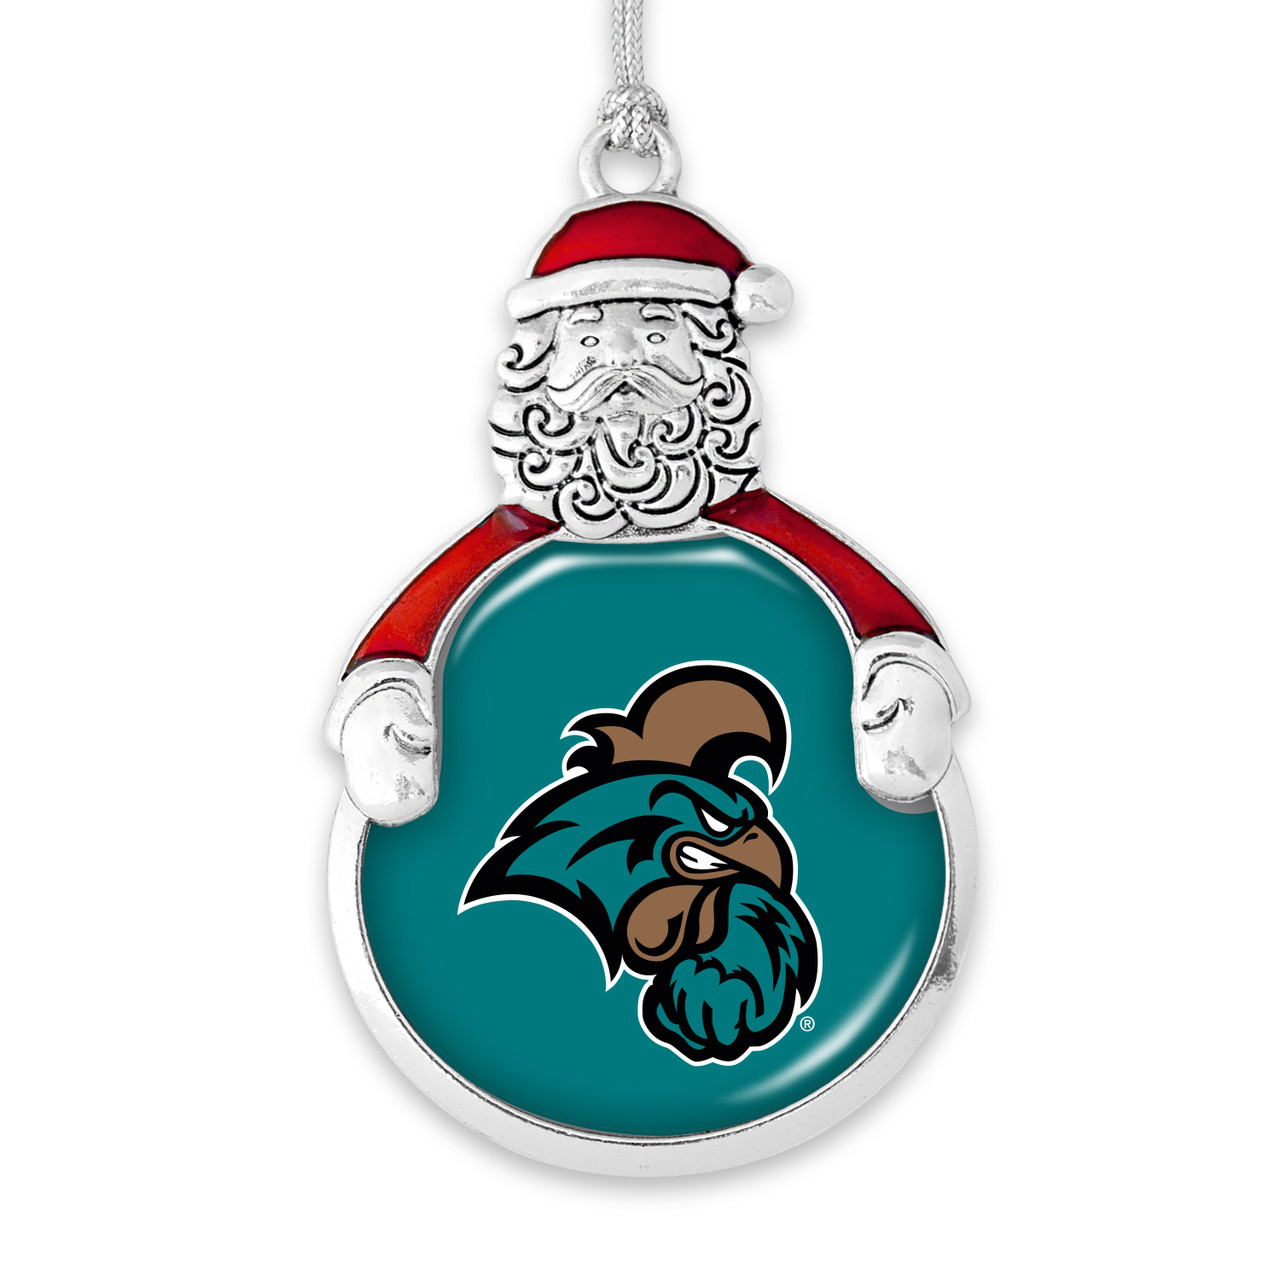 Coastal Carolina Chanticleers Christmas Ornament- Santa with Team Logo